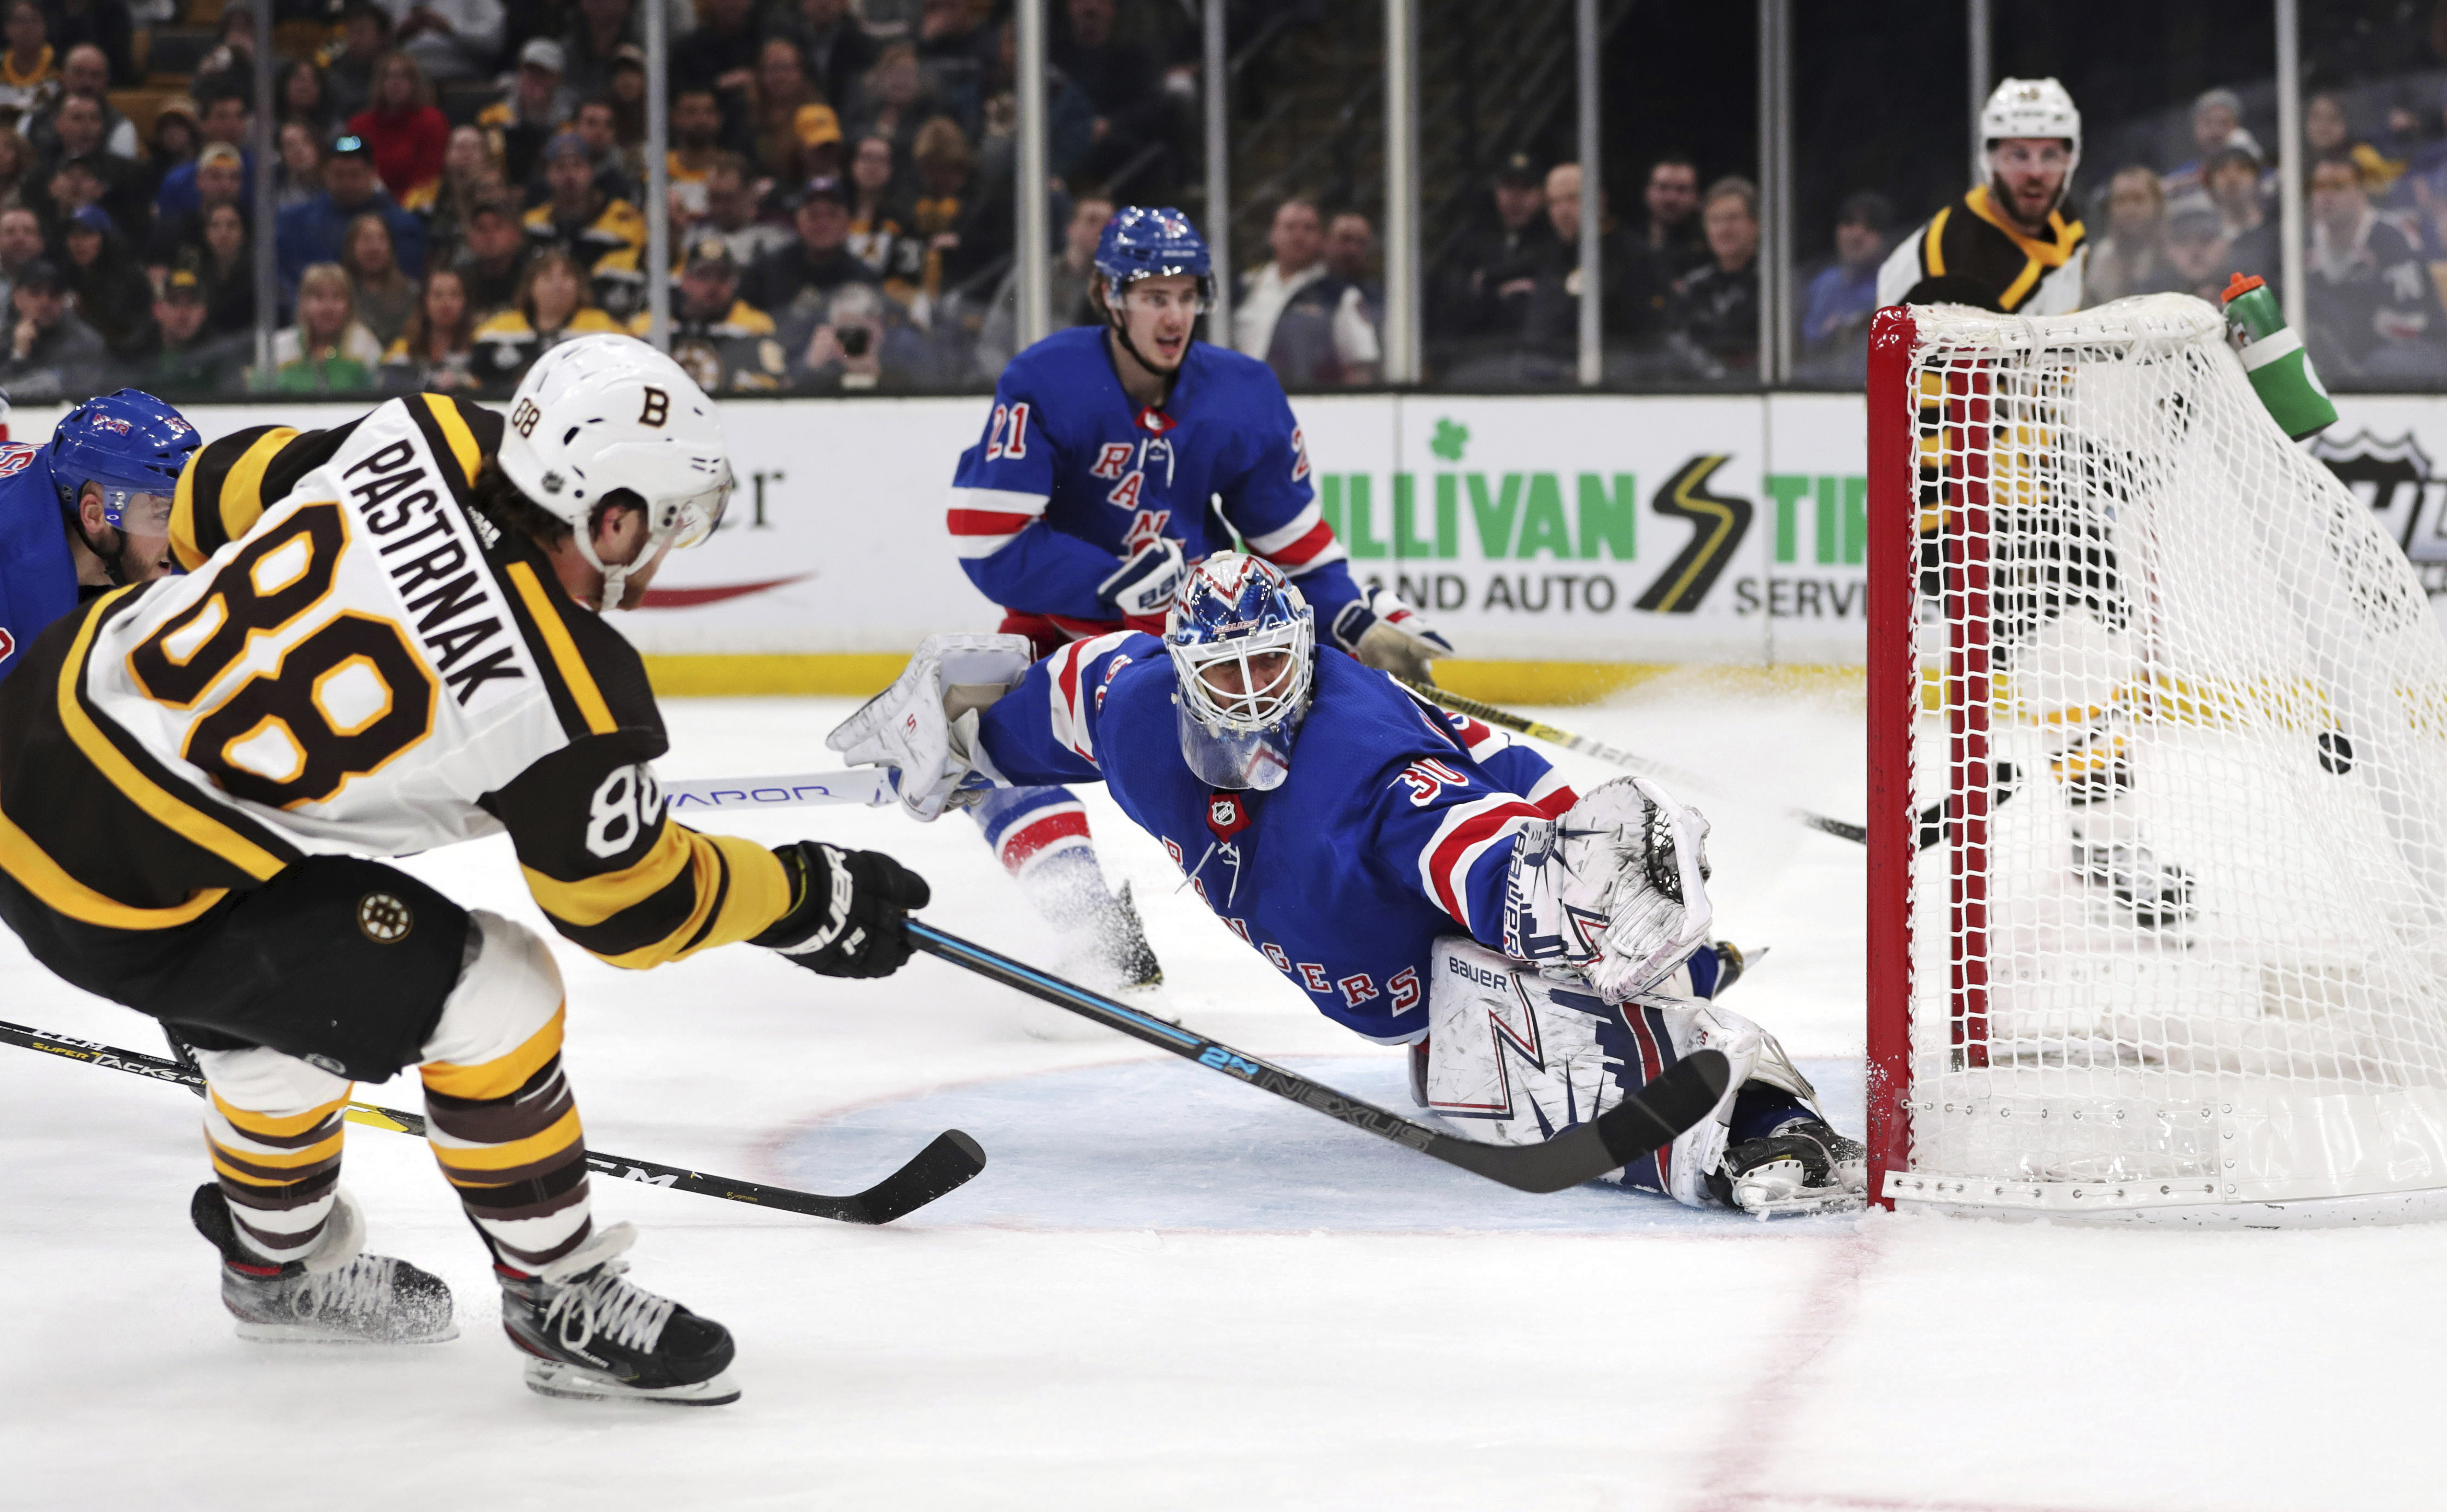 David Pastrnak has hat trick, Bruins beat Rangers 6-3